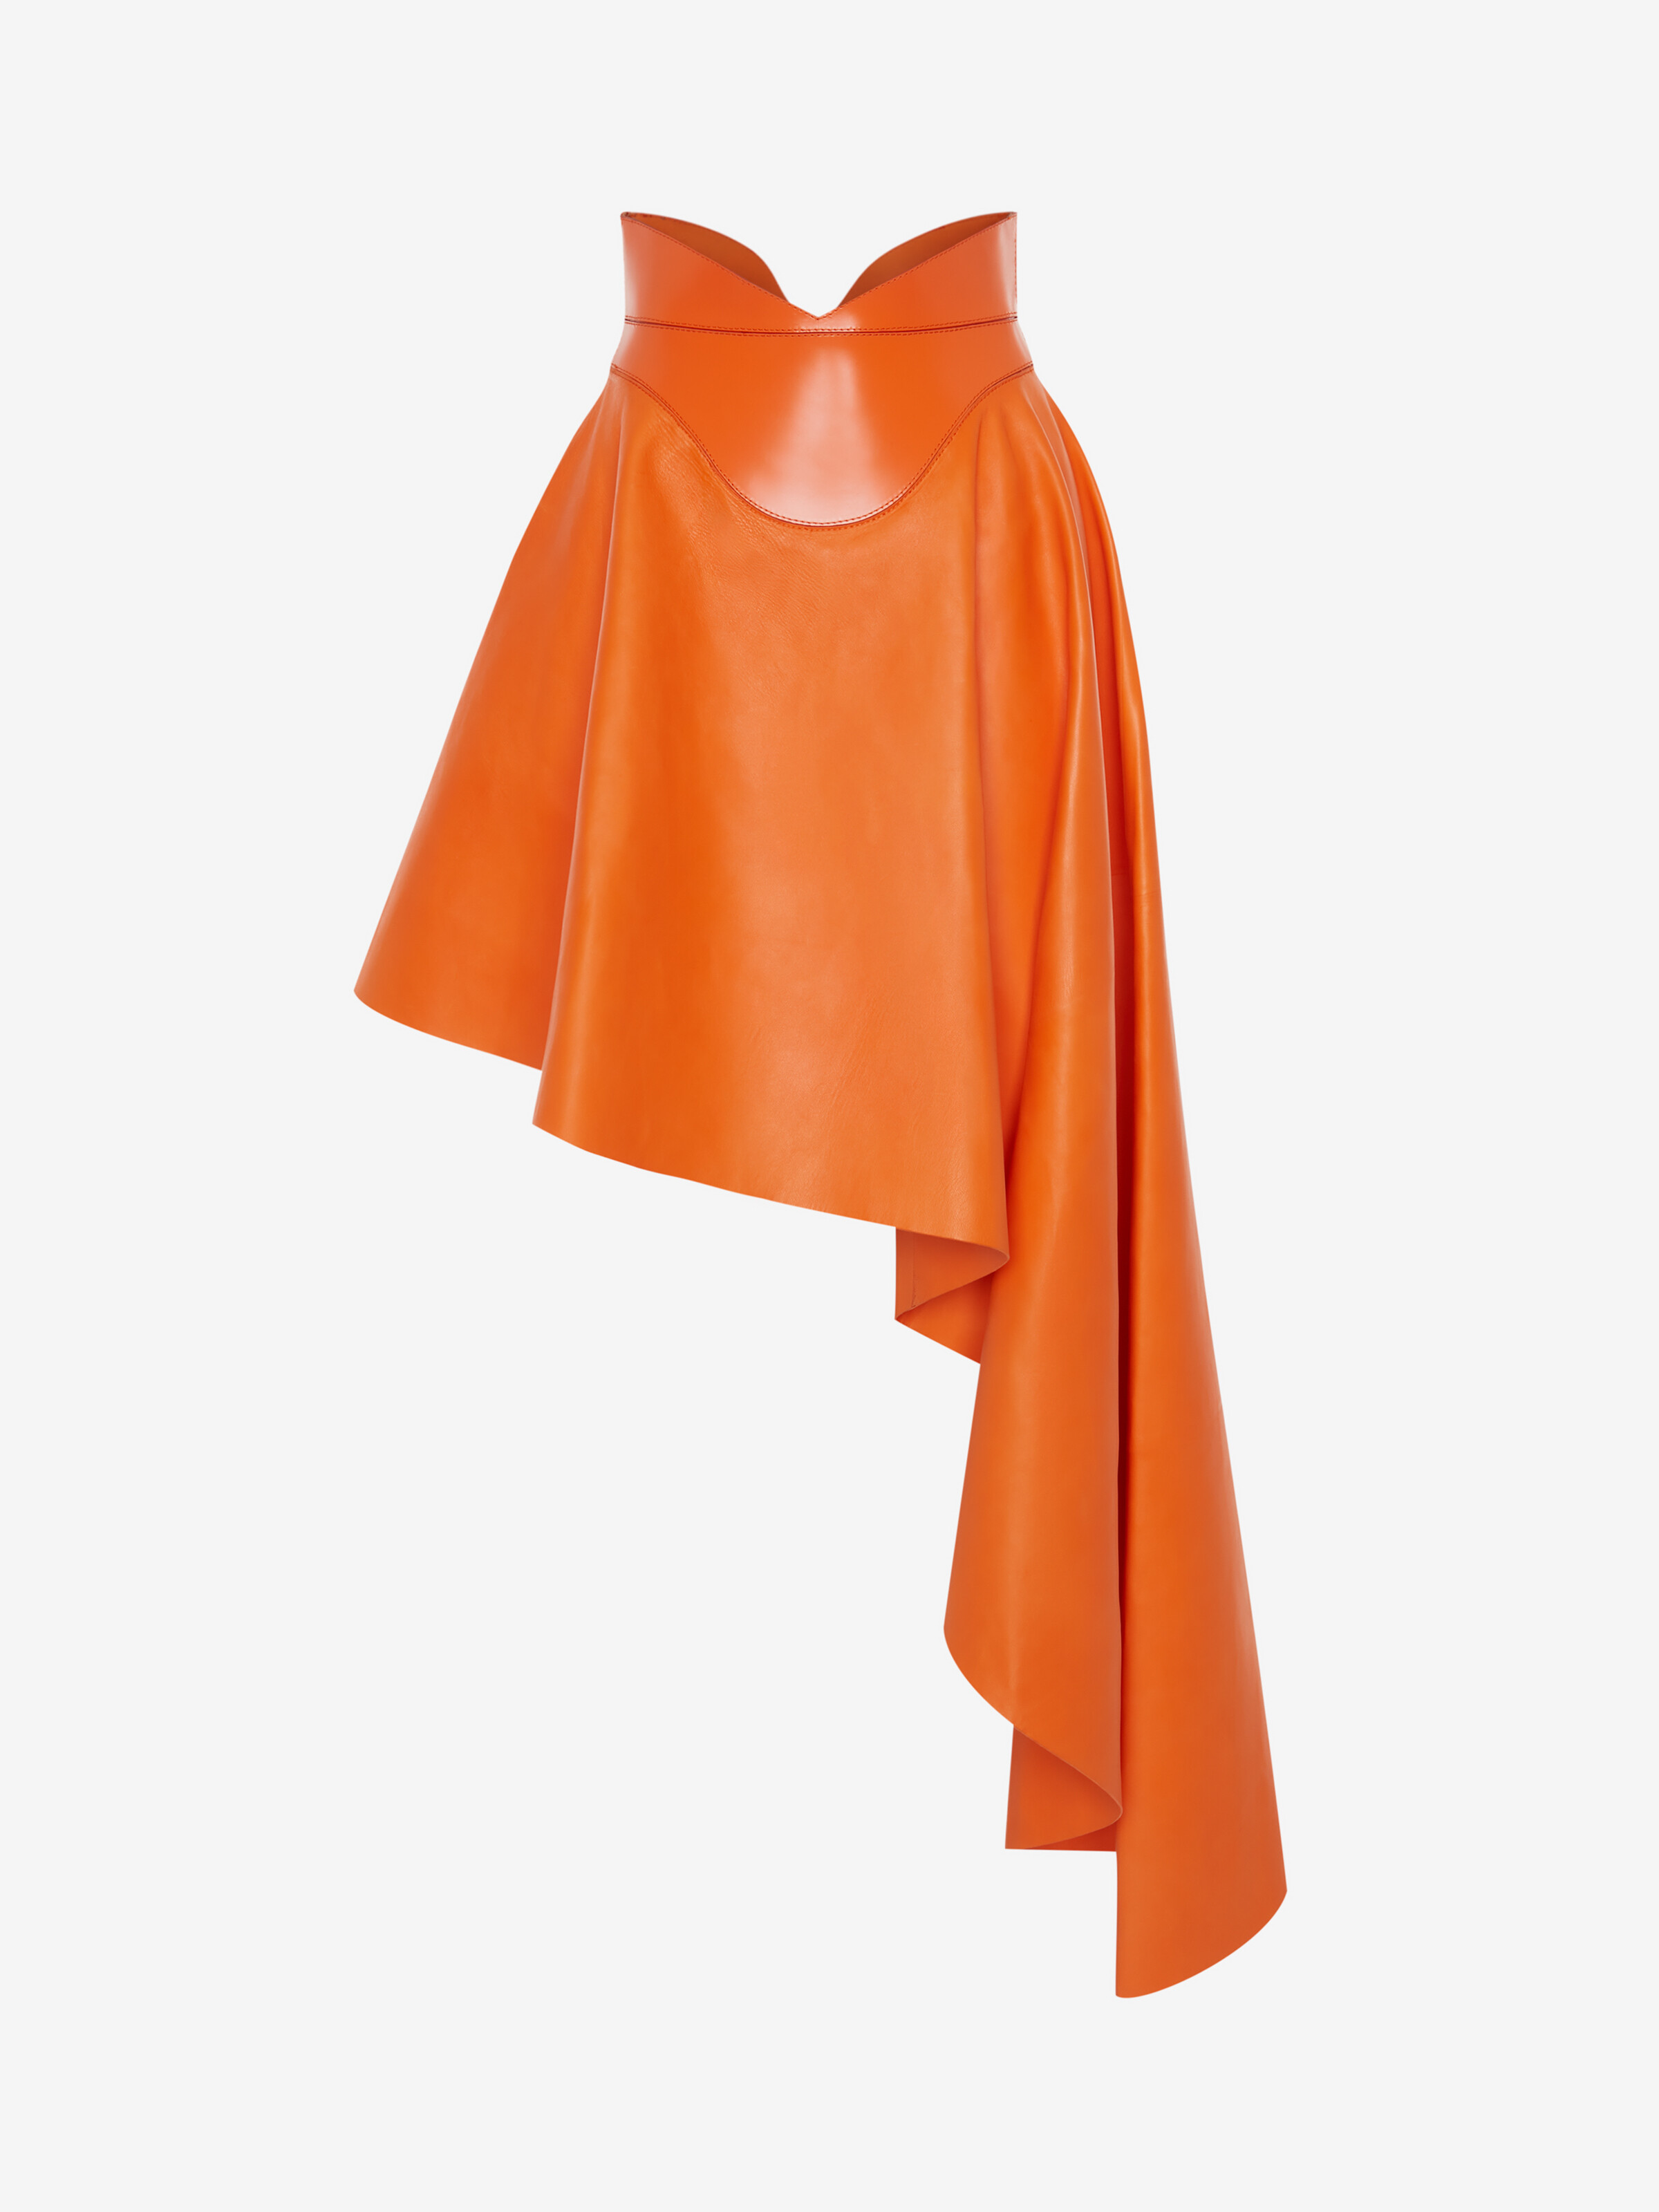 Alexander McQueen Sunset Orange Slash Bag